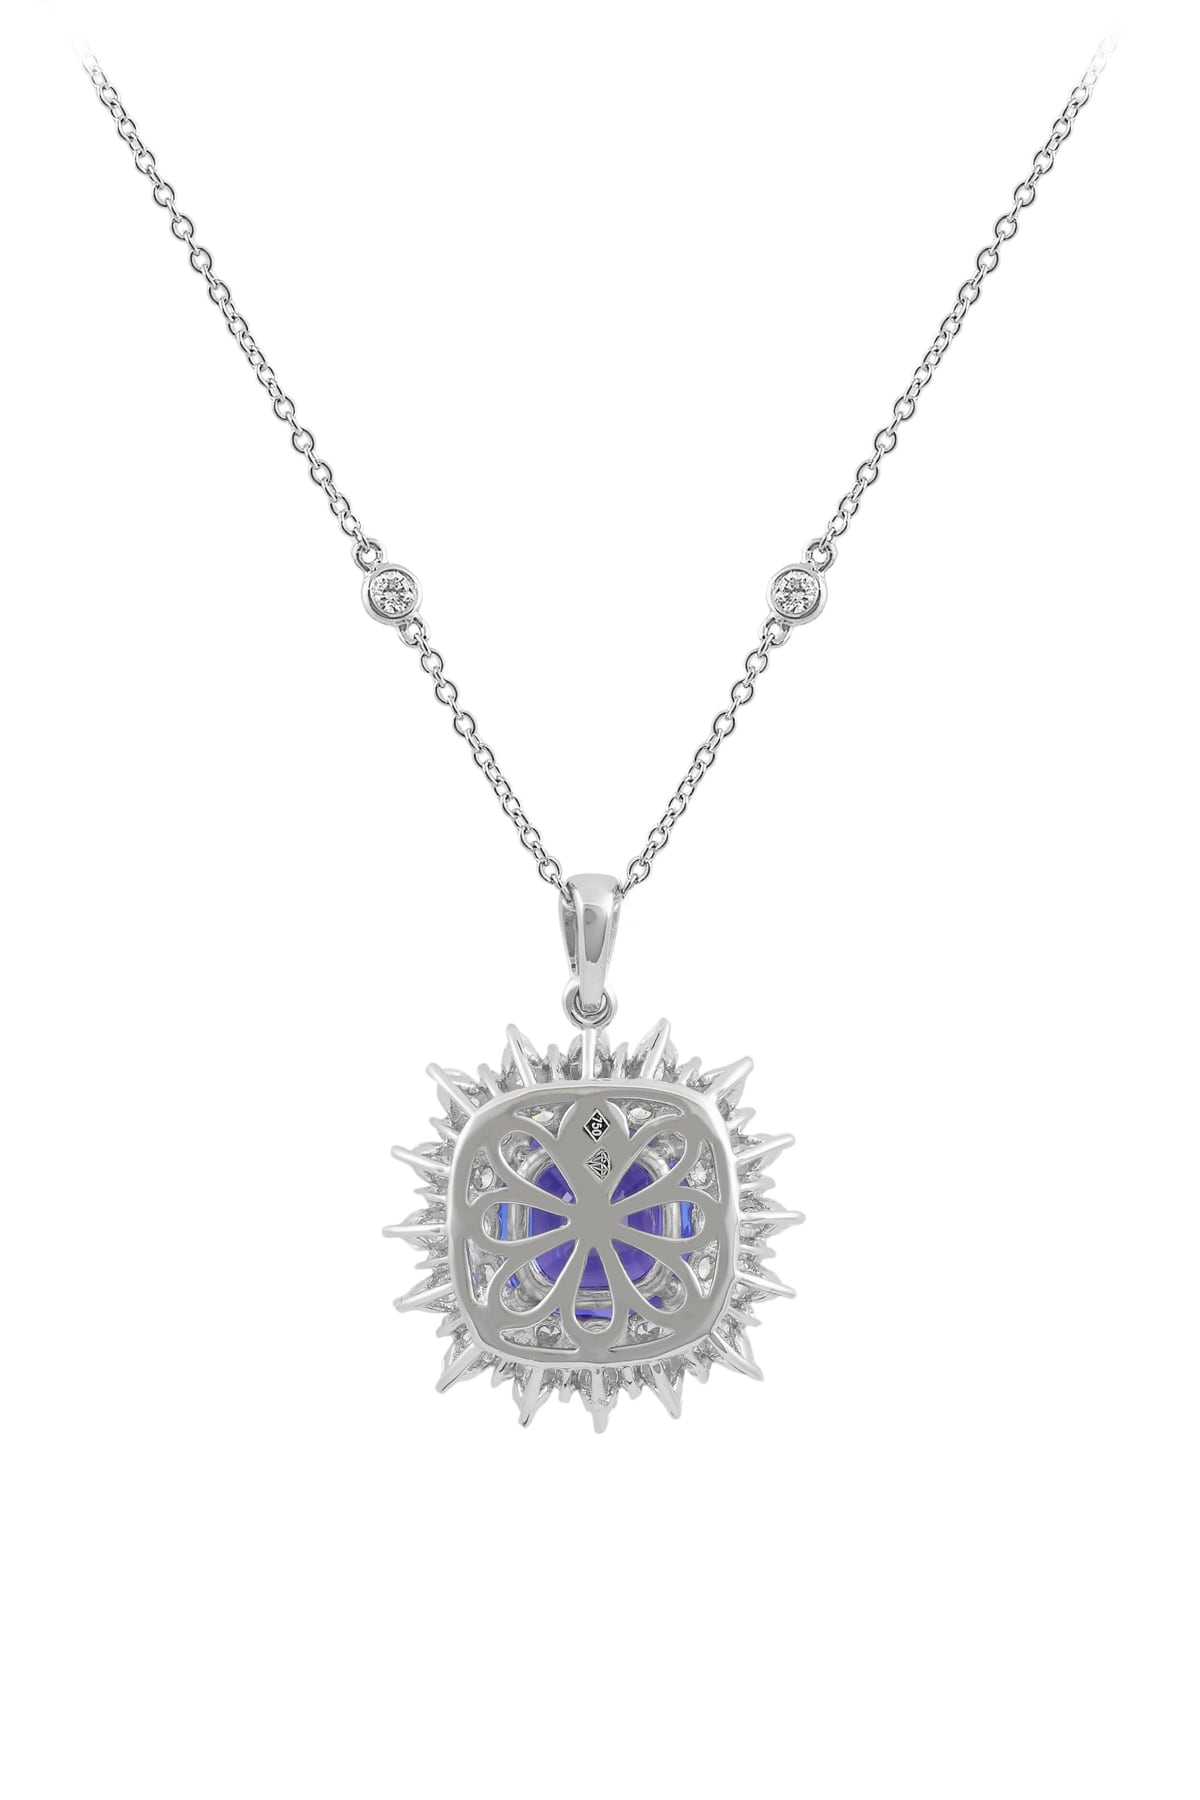 4.45 Carat Cushion Cut Tanzanite & Diamond Cluster Style Pendant from LeGassick Jewellery.